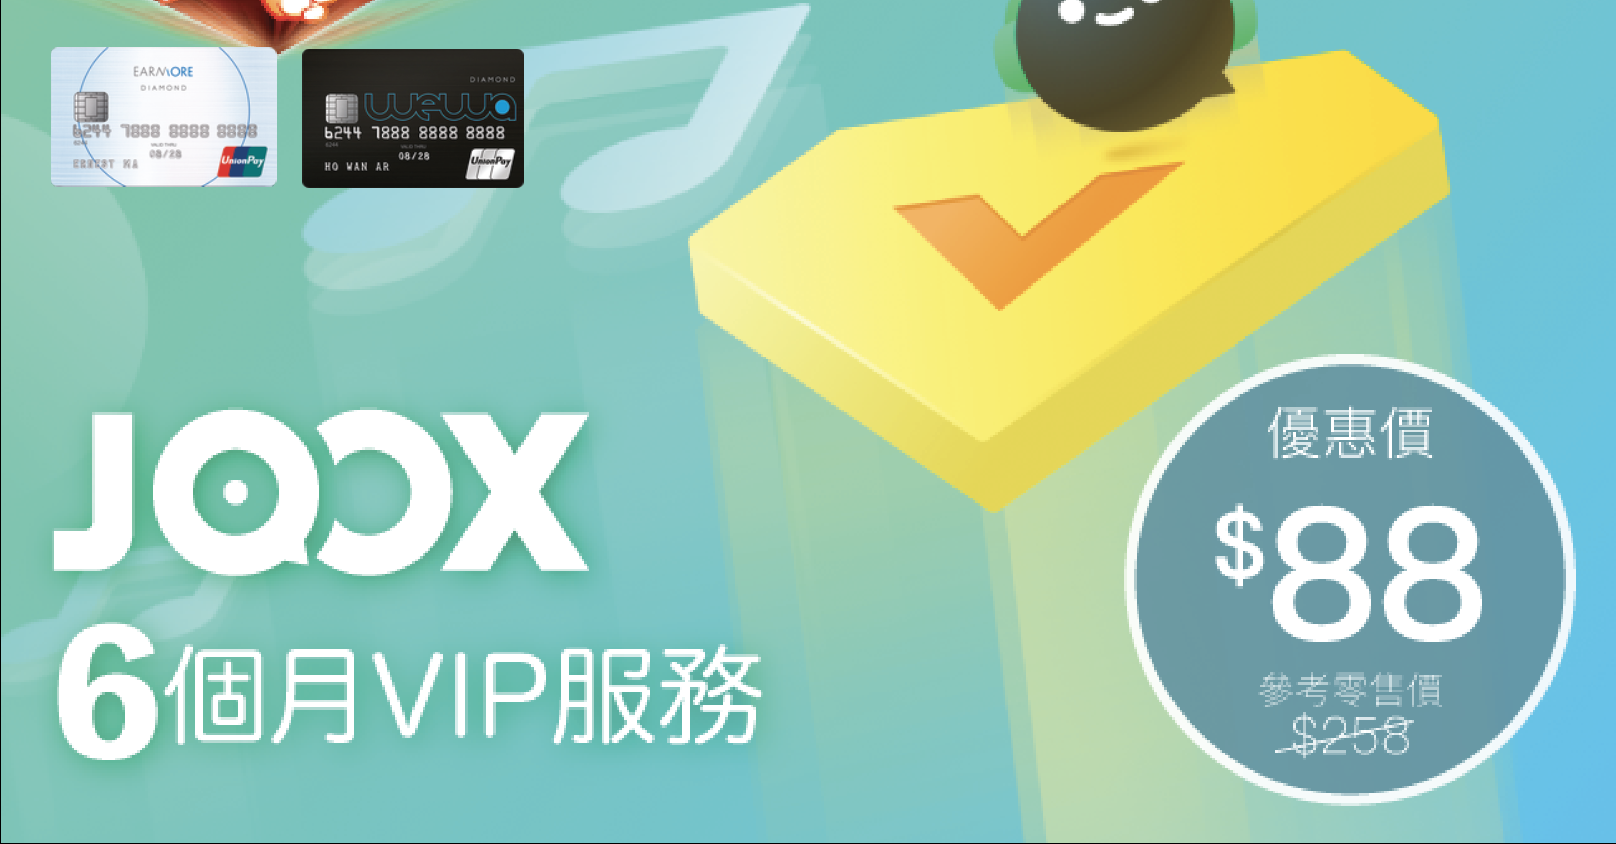 安信Earnmore / 安信WeWa卡 $88 JOOX 6個月VIP服務